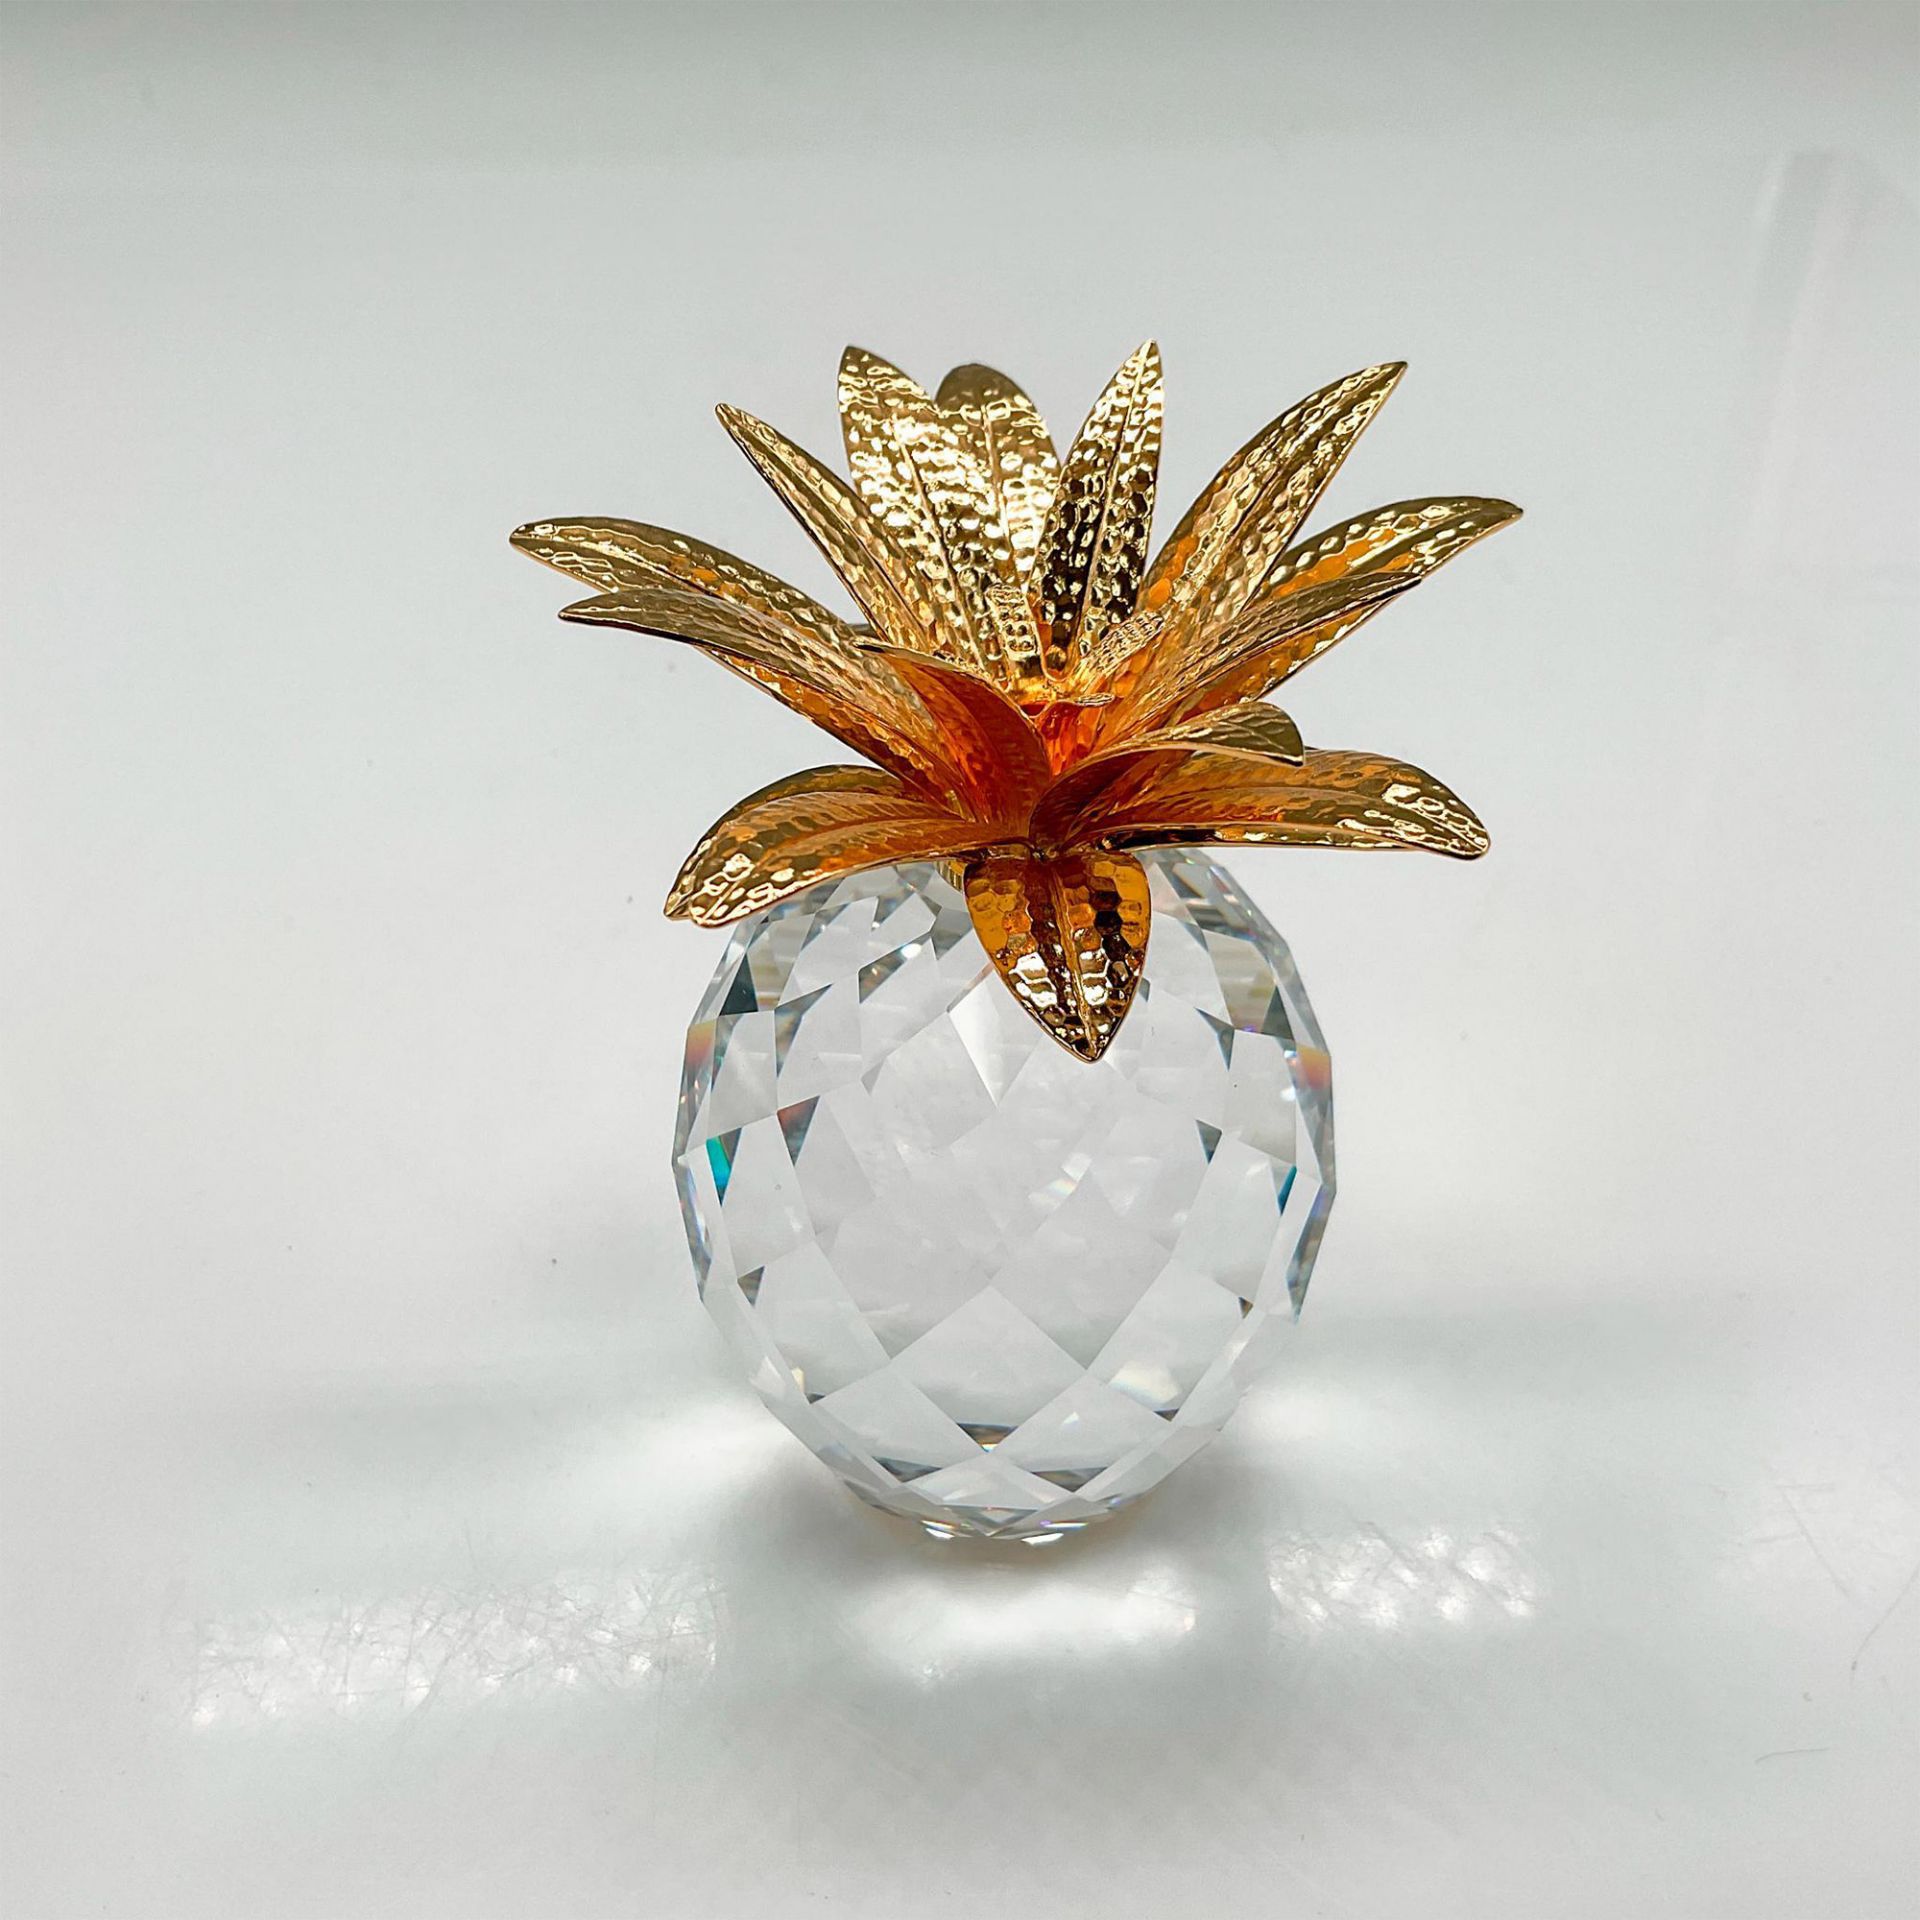 Swarovski Crystal Figurine, Pineapple - Image 2 of 4